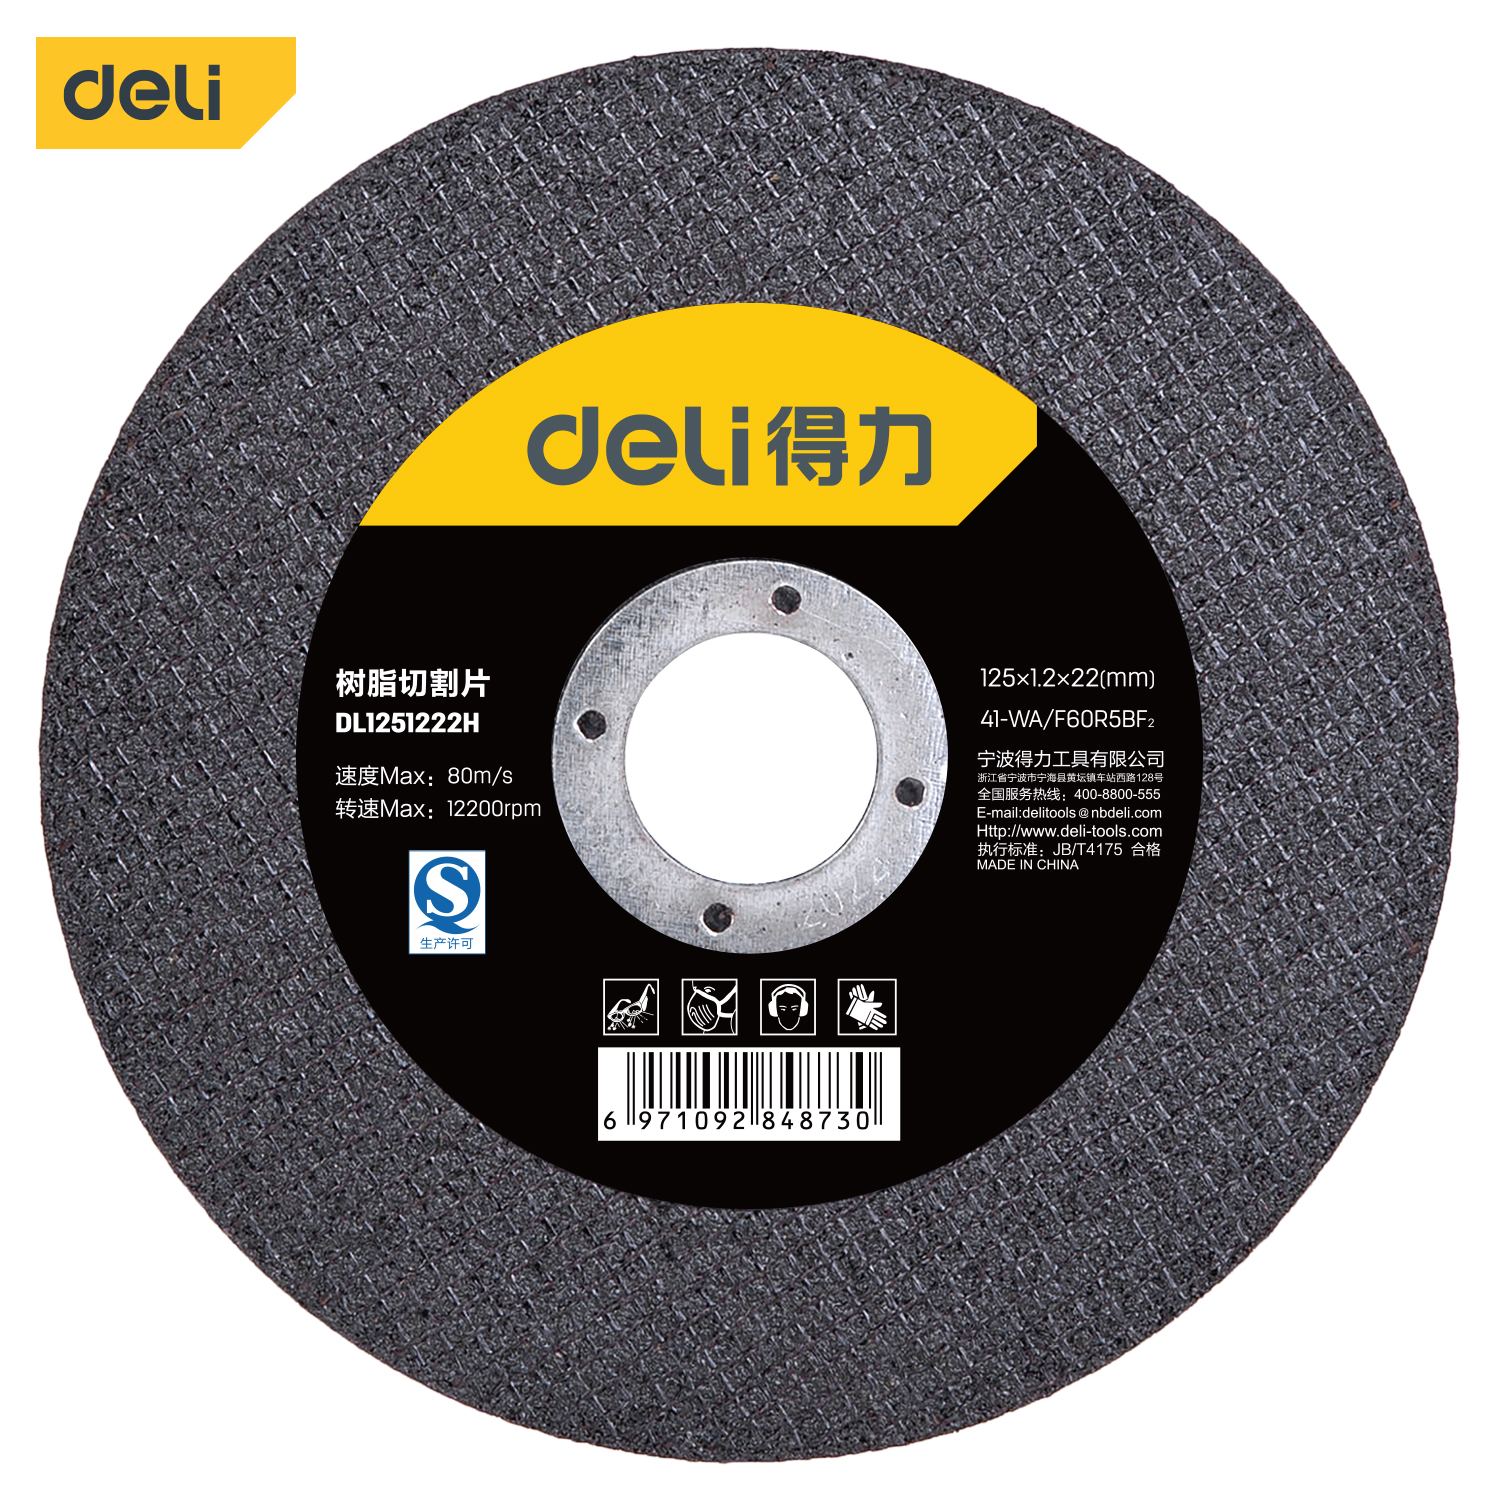 Deli-DL1251222H Flip Discs